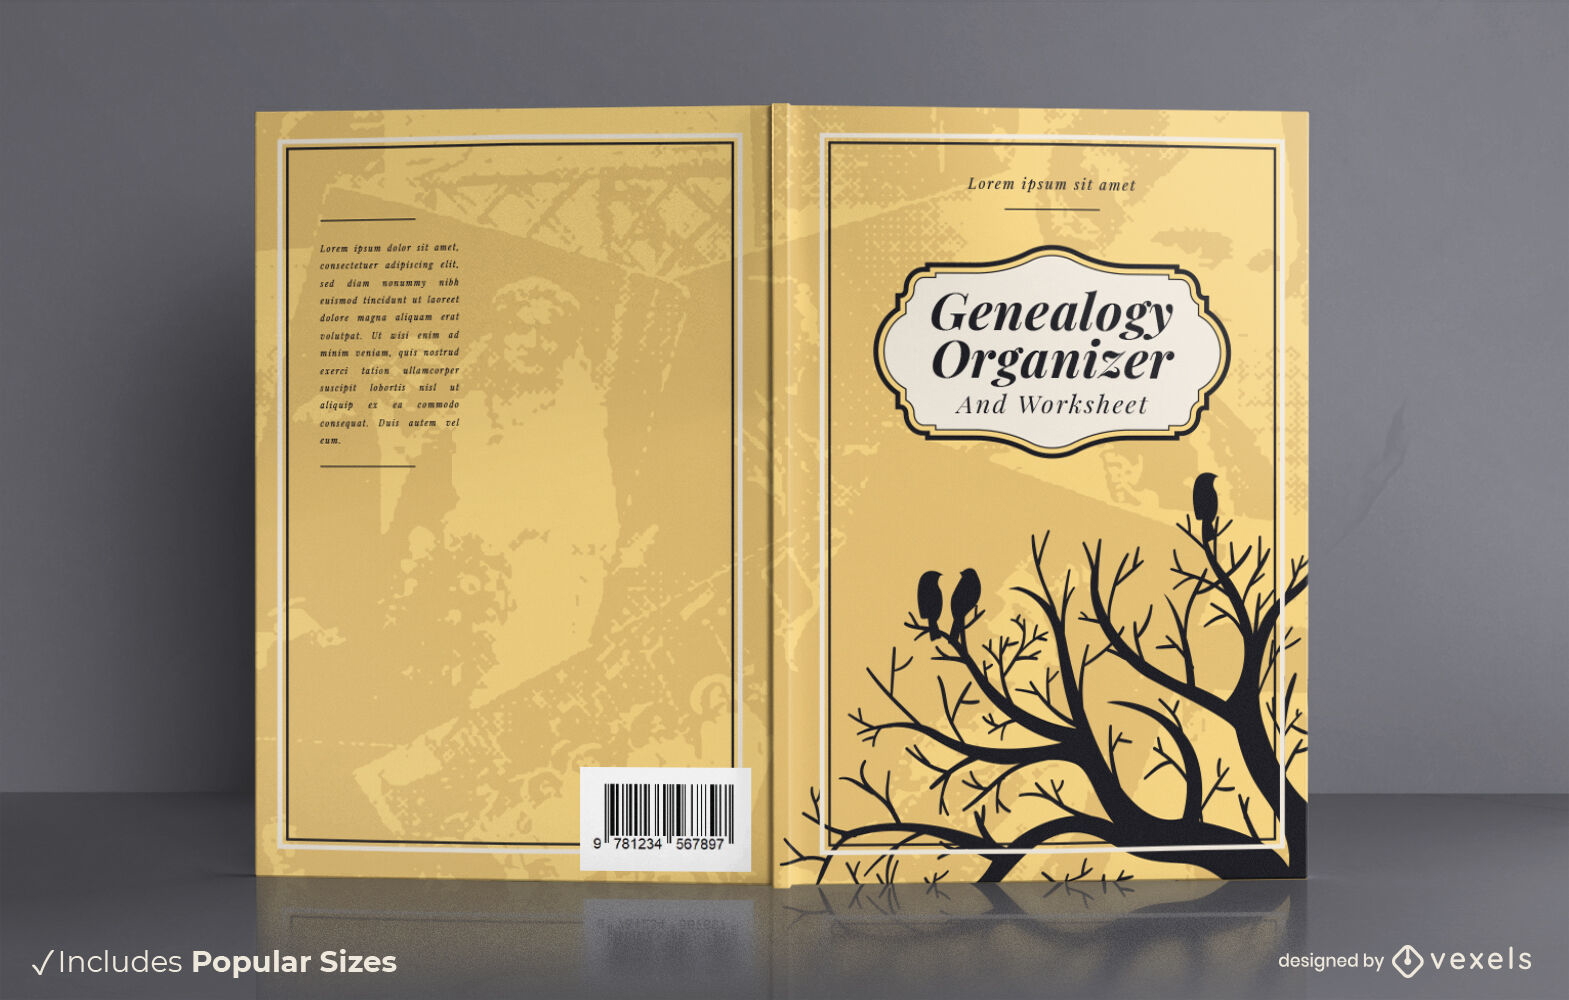 Genealogy organizer book cover design